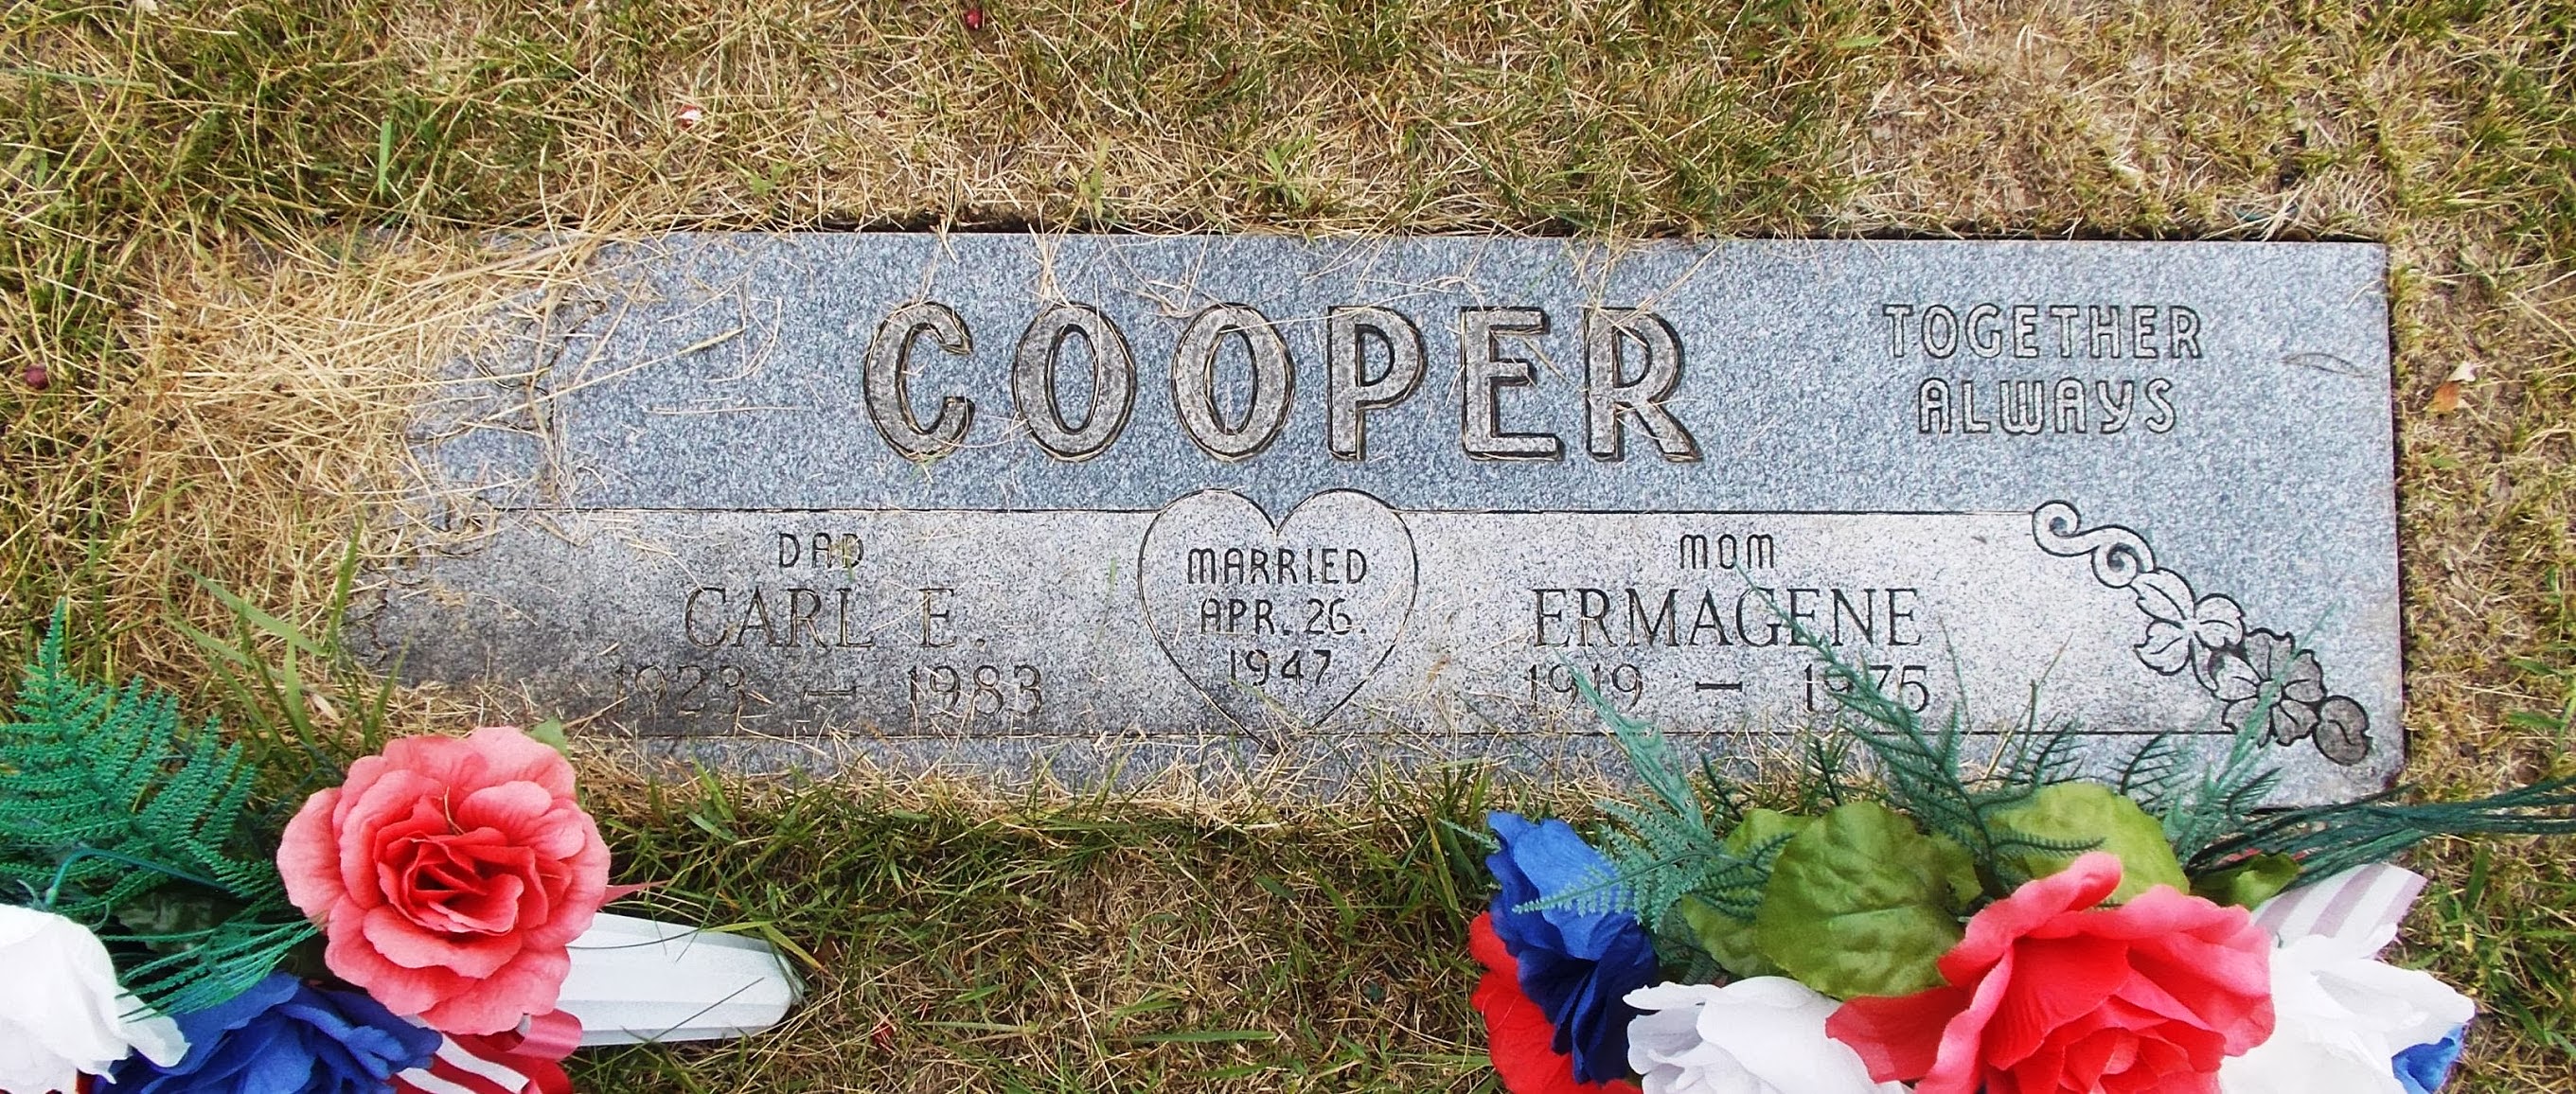 Ermagene Cooper